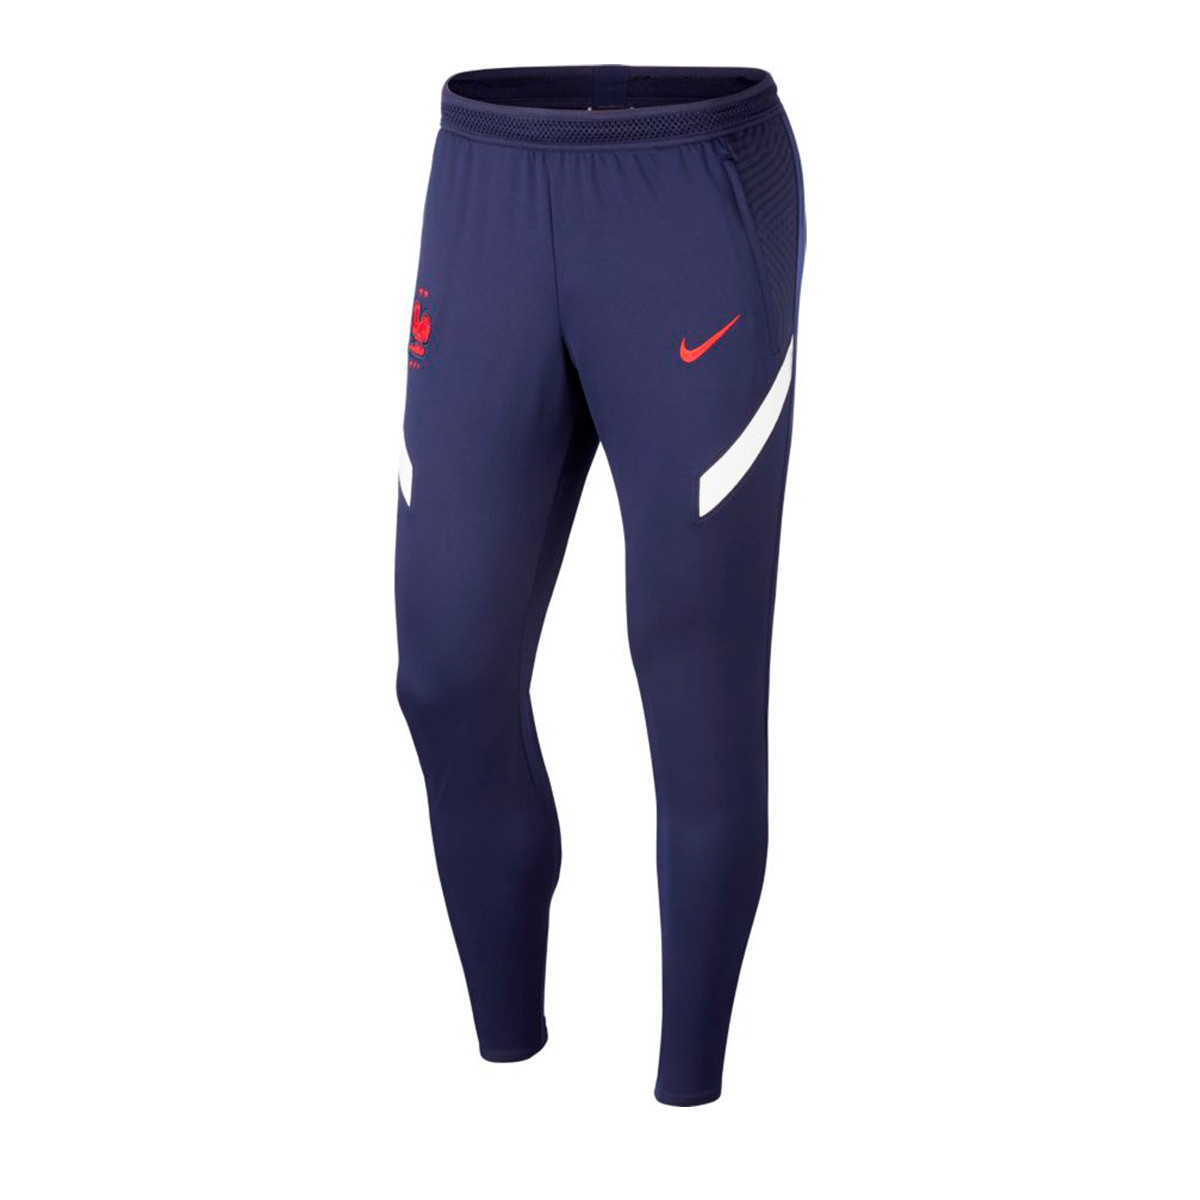 Long pants Nike France Dri-Fit Strike KP 2020-2021 Blackened blue-White ...